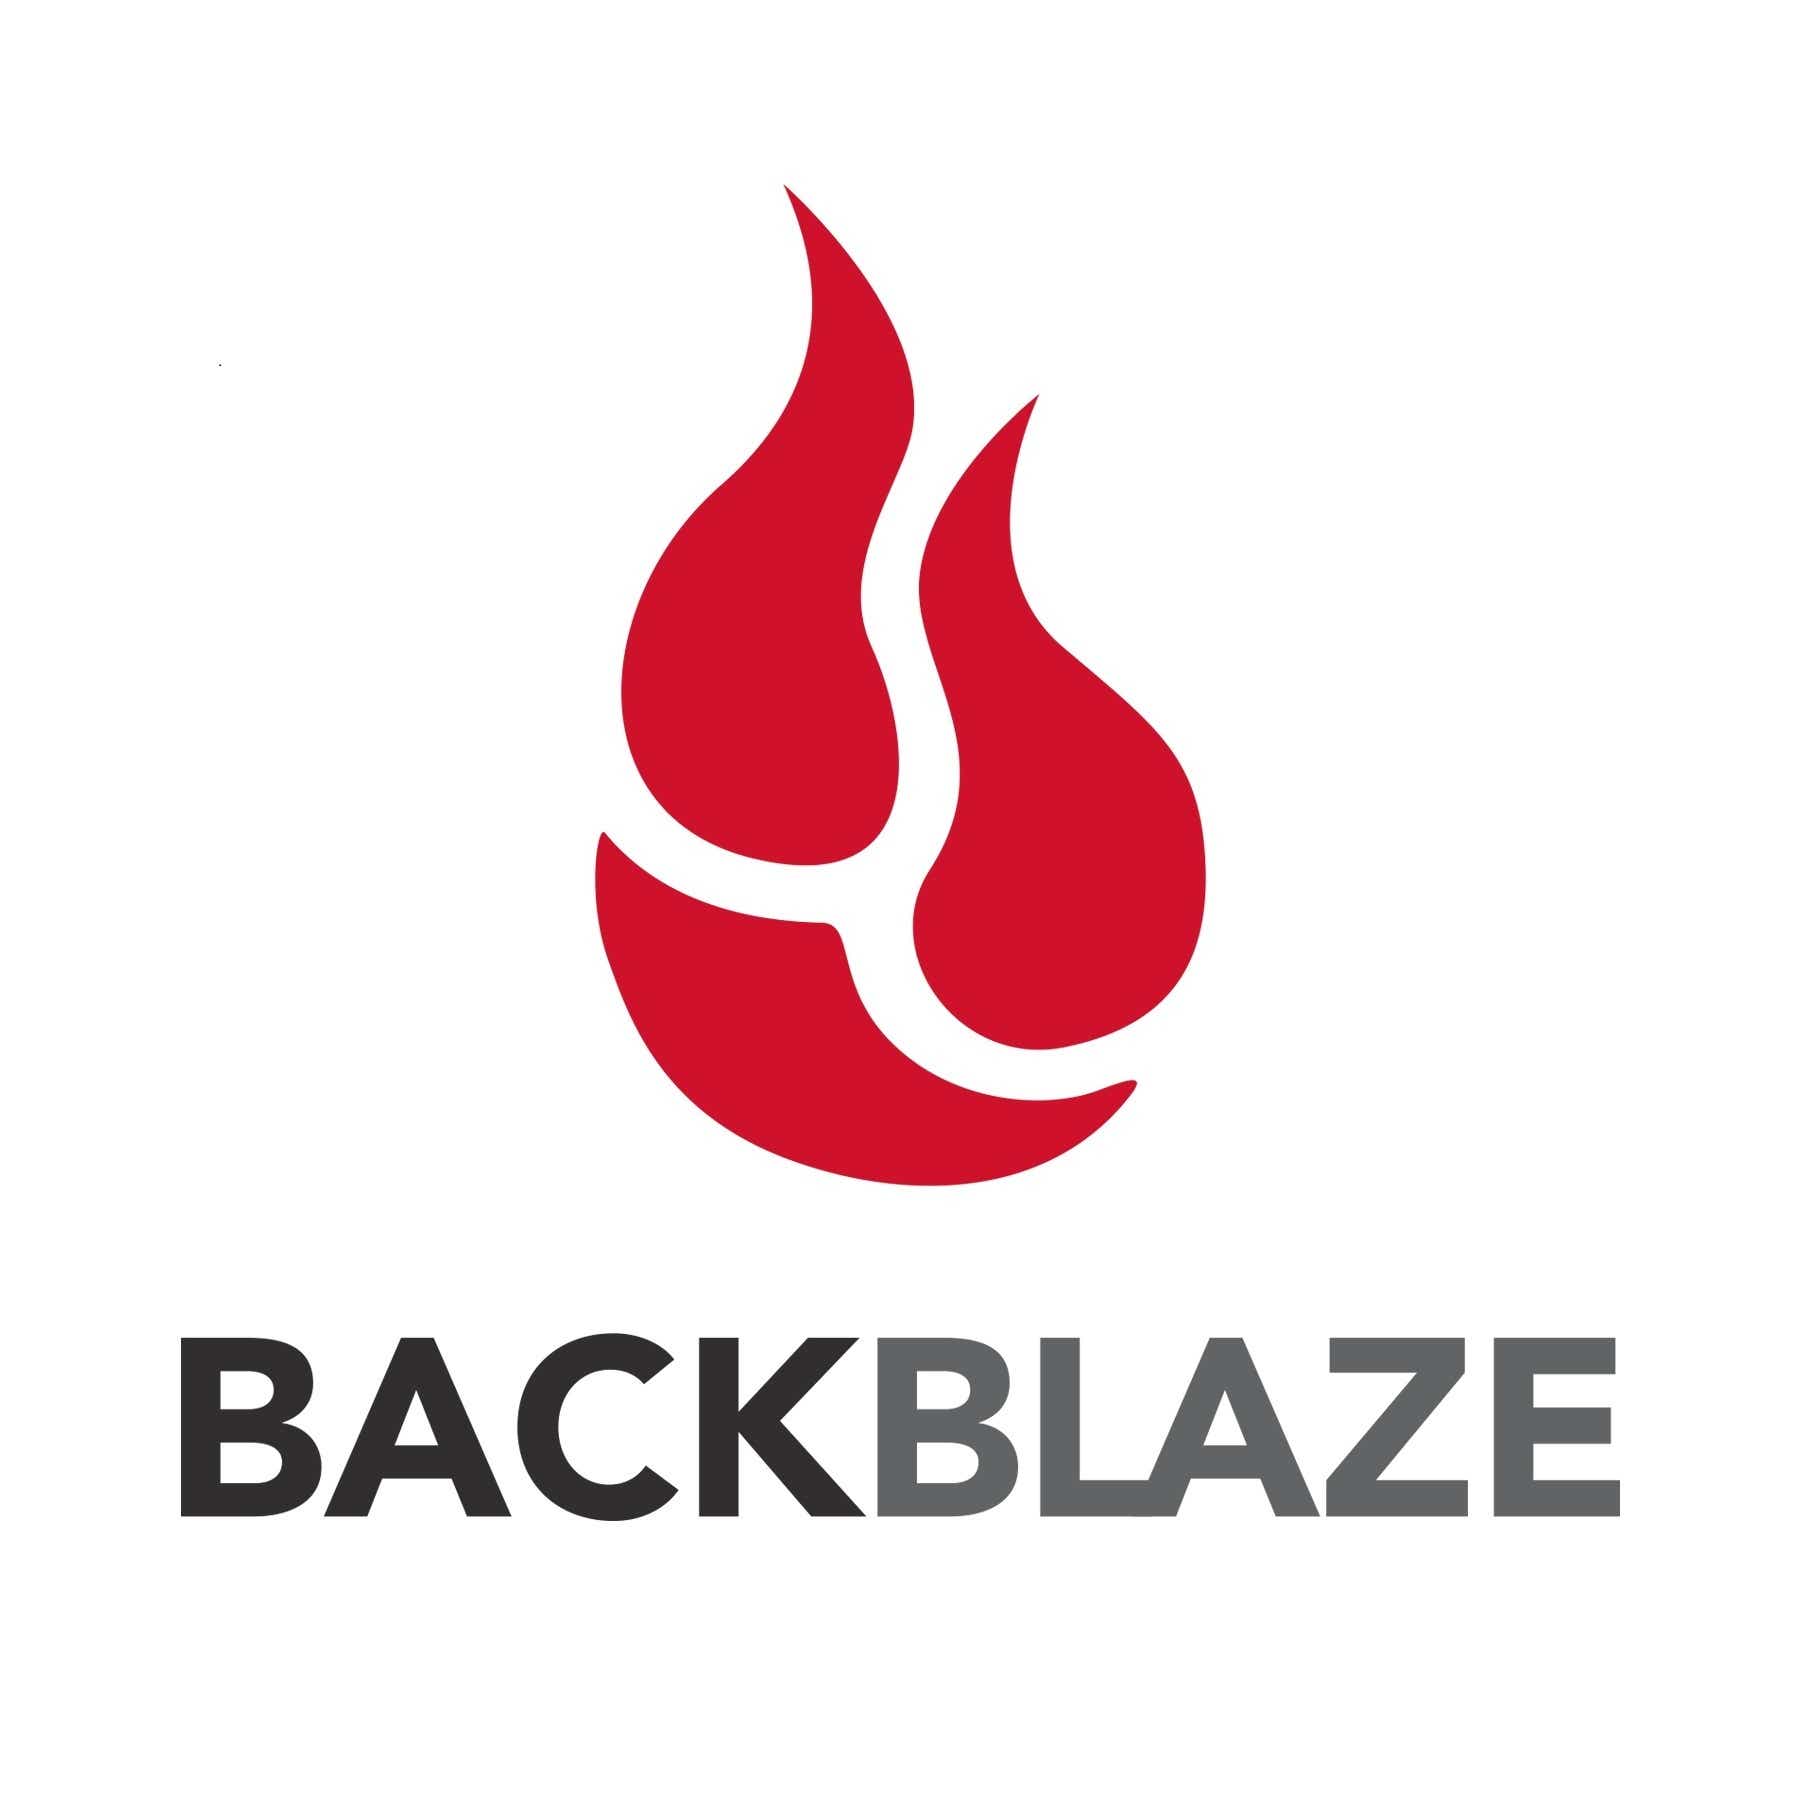 Backblaze - Best budget option